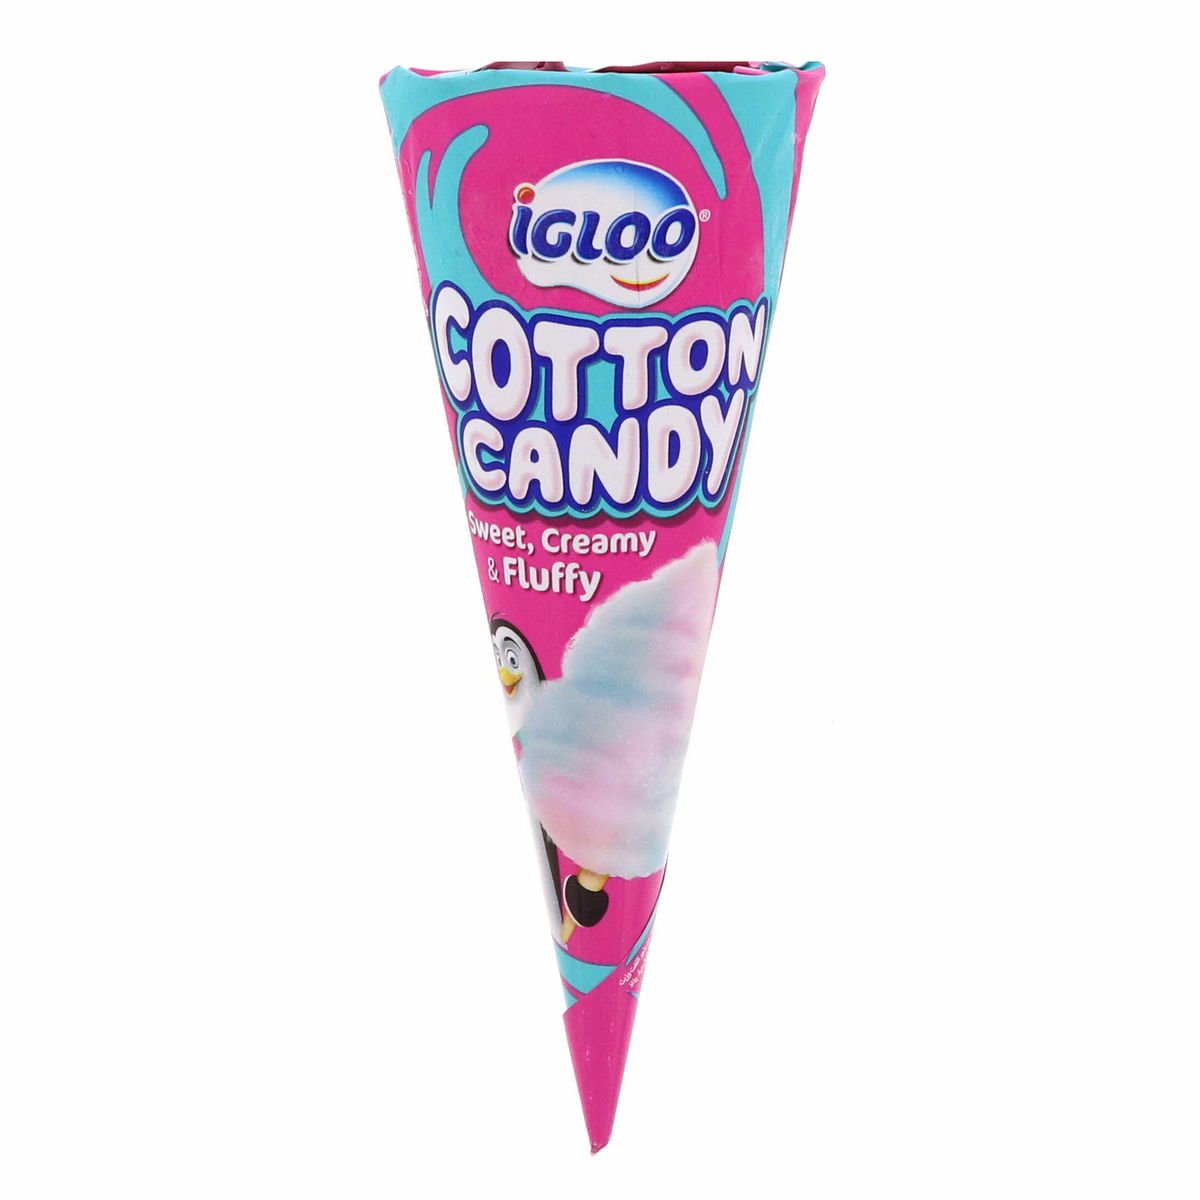 Igloo Cotton Candy Ice Cream Cone 120 ml